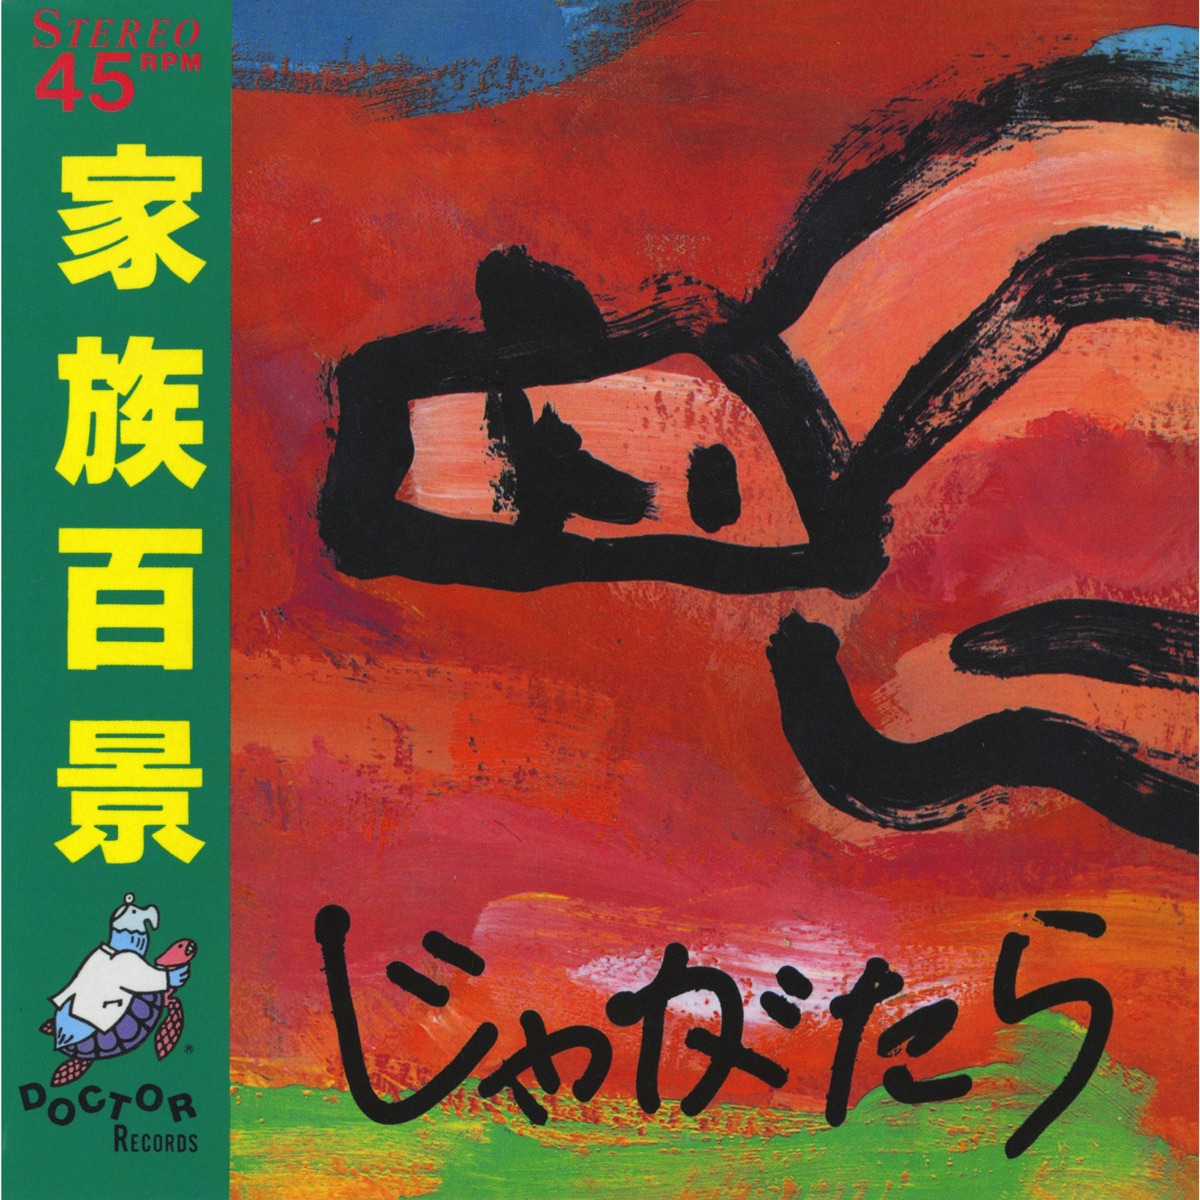 BEST OF JAGATARA 〜西暦2000年分の反省〜 - JAGATARAのアルバム - Apple Music